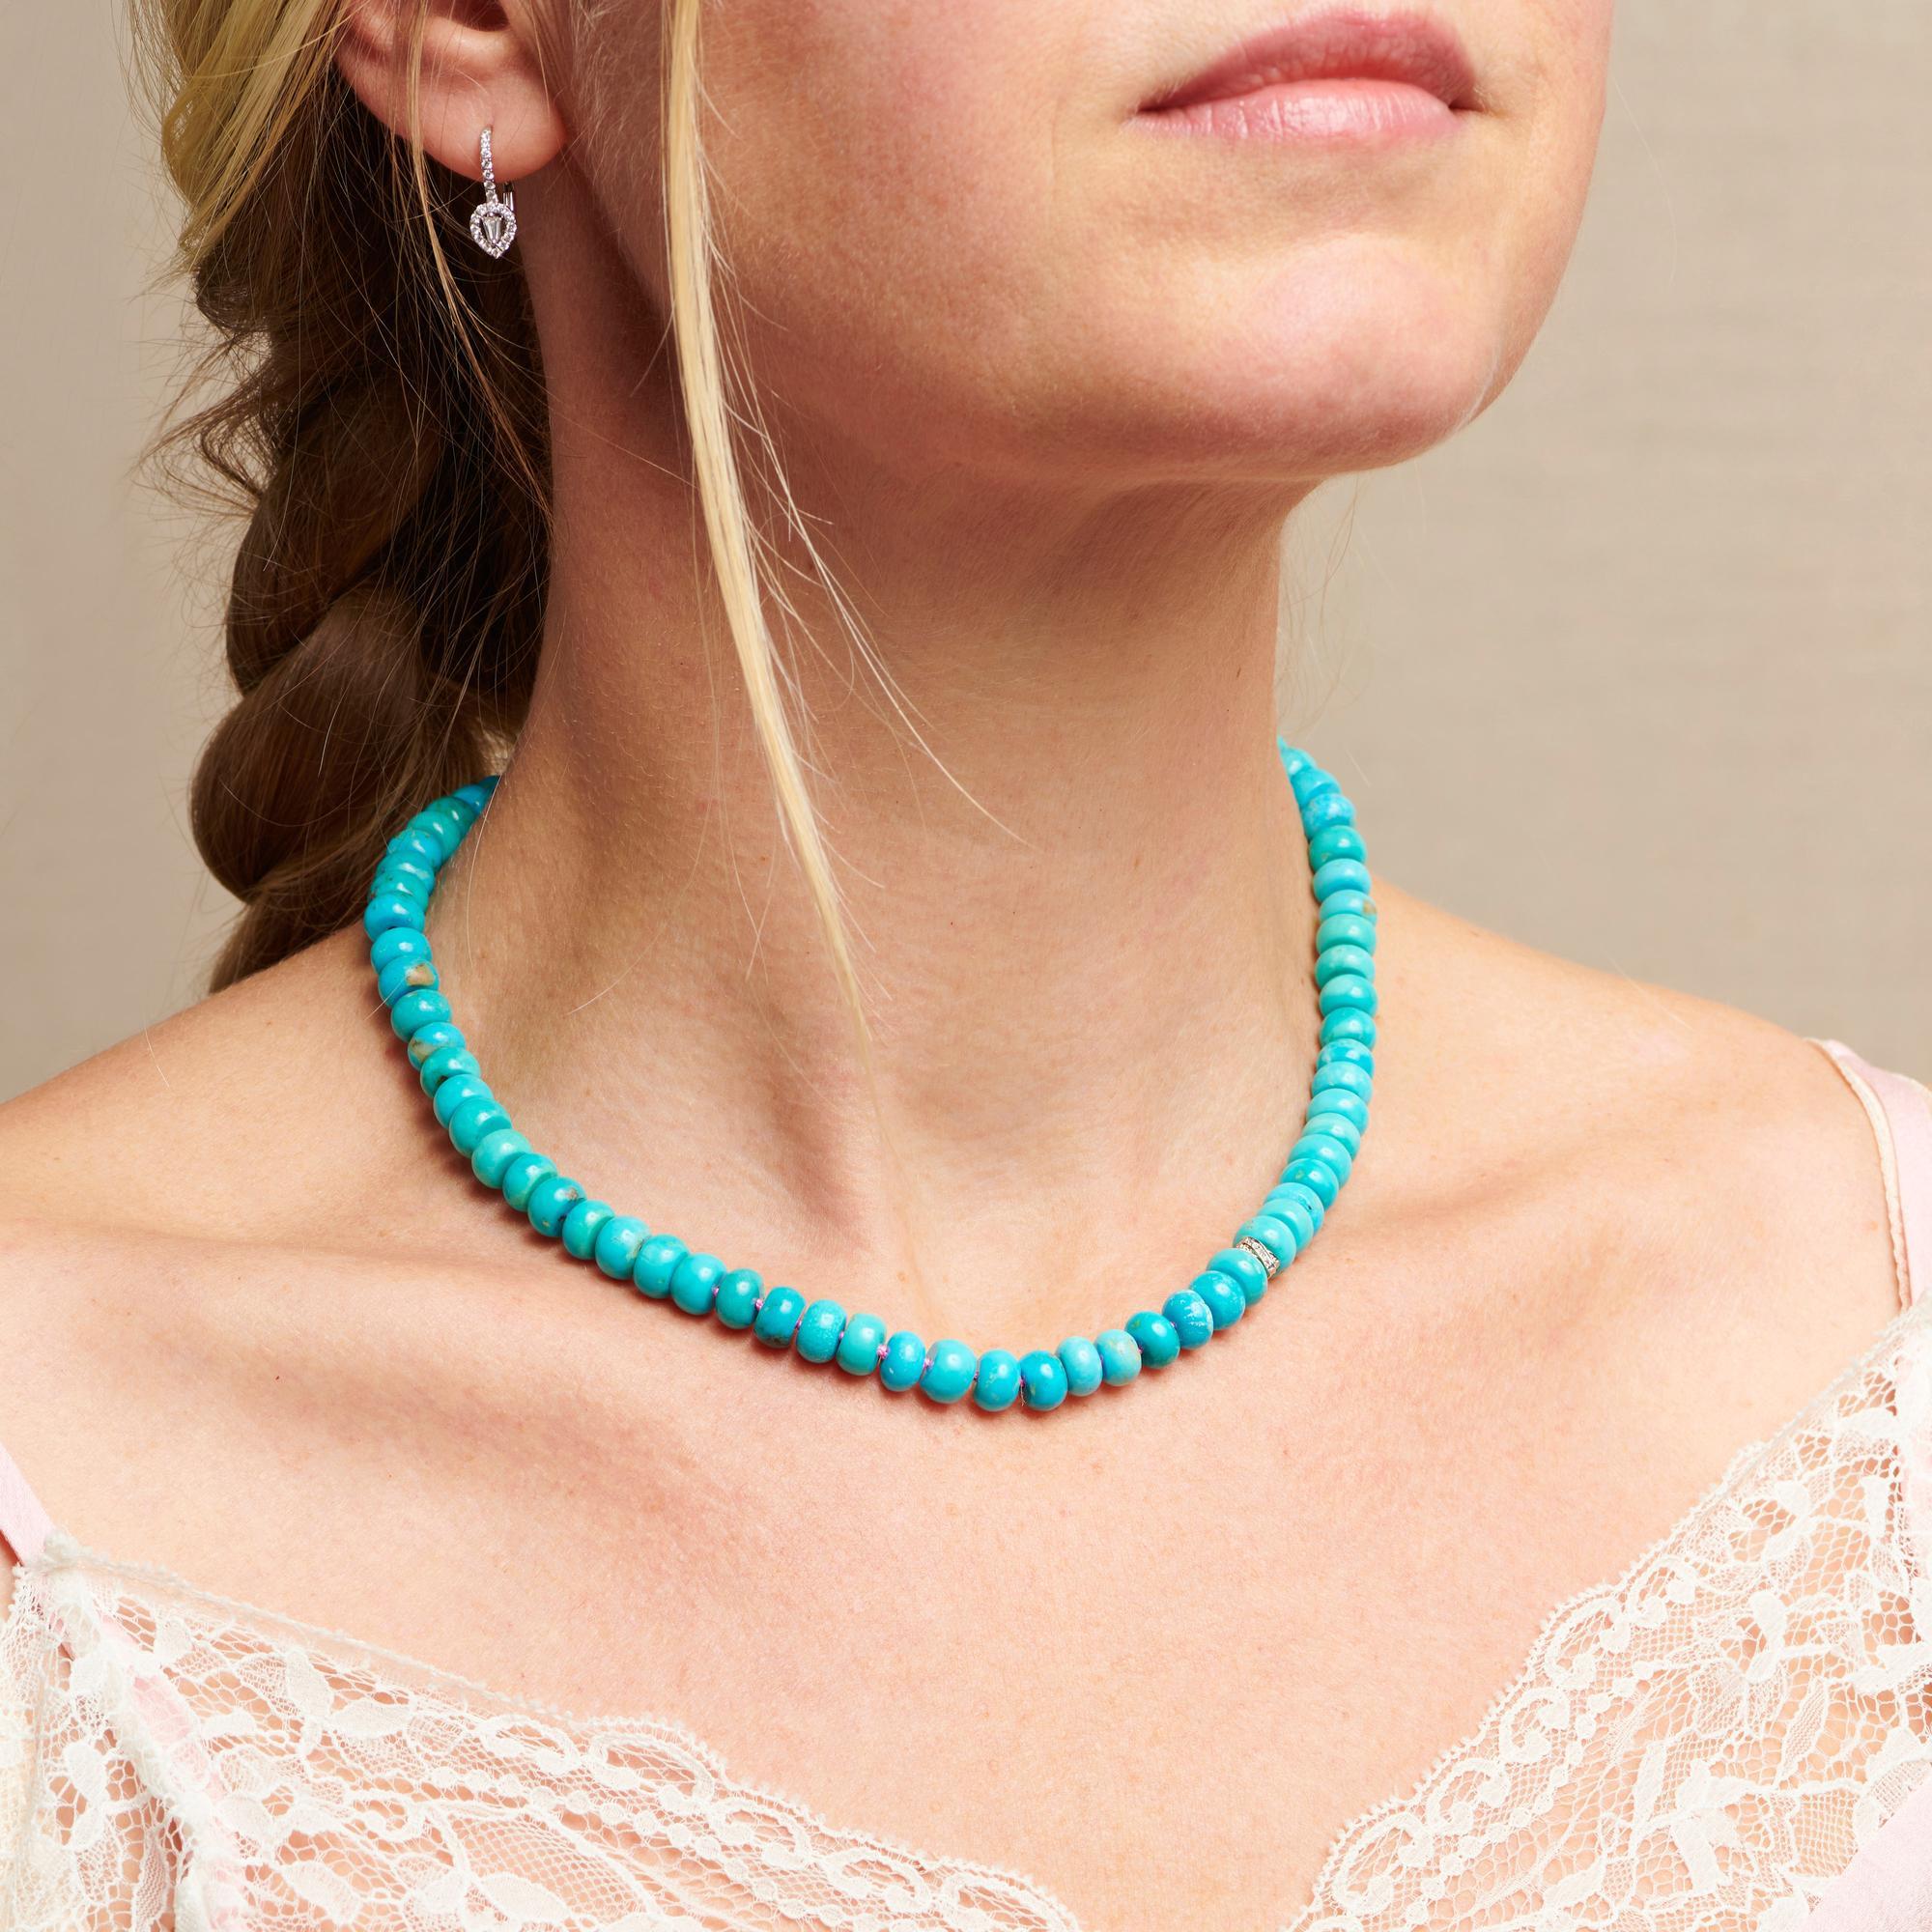 Modern Solid Gold 14K Arizona Sleeping Beauty Turquoise Beaded Necklace with Diamonds